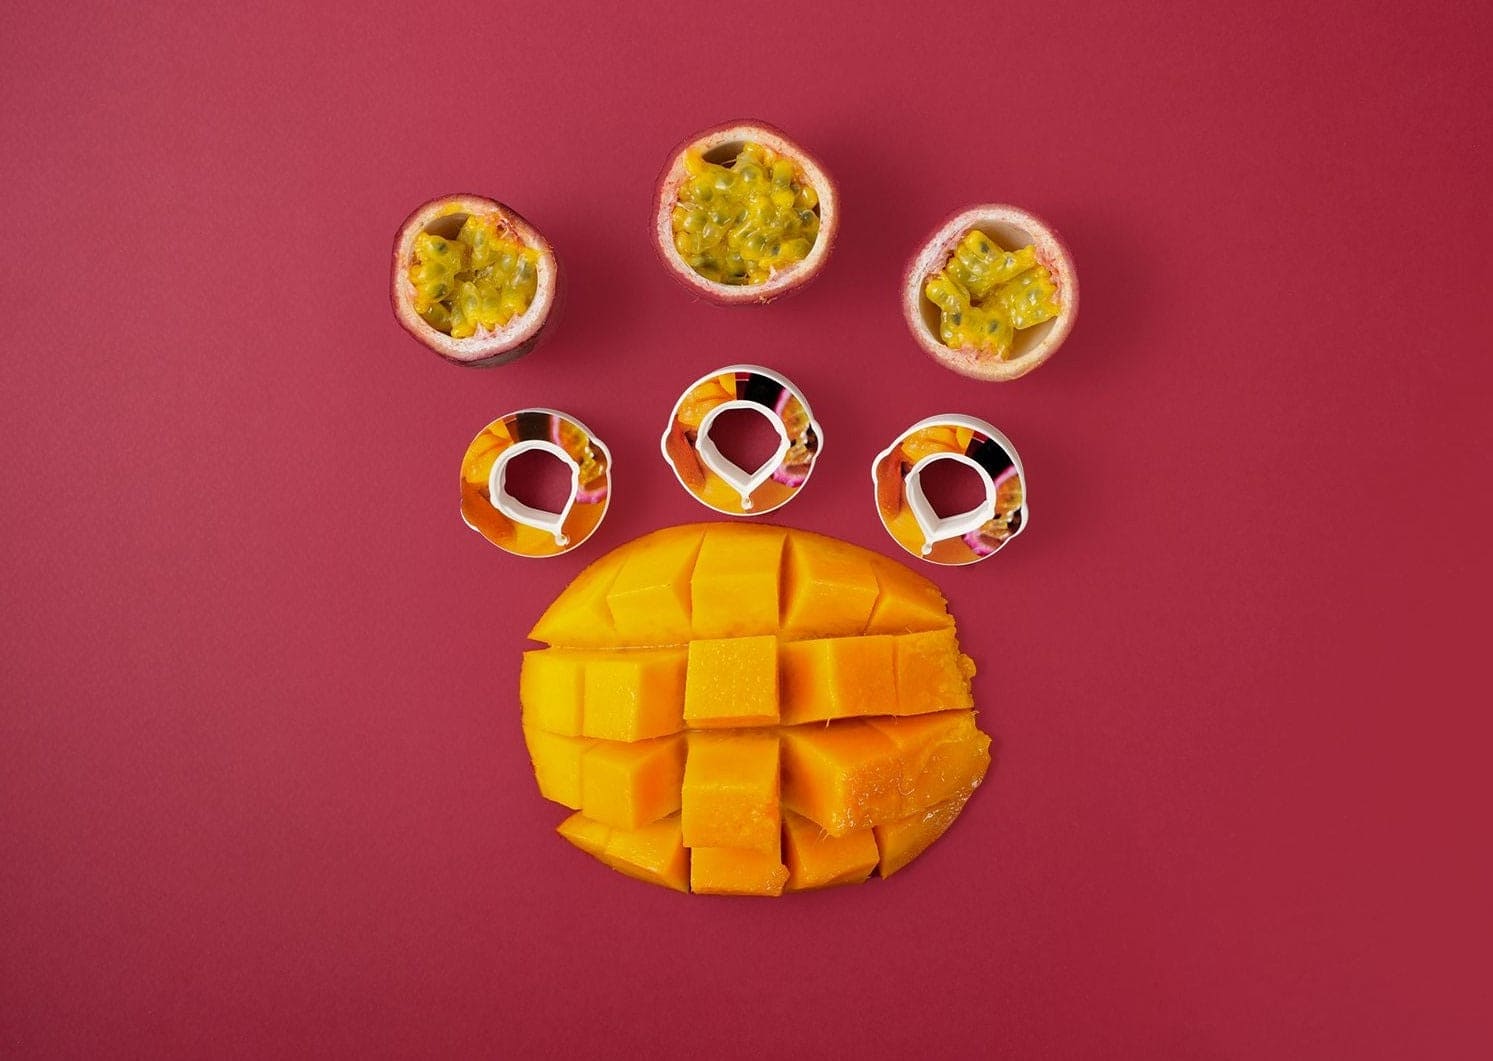 Passionfruit mango pods